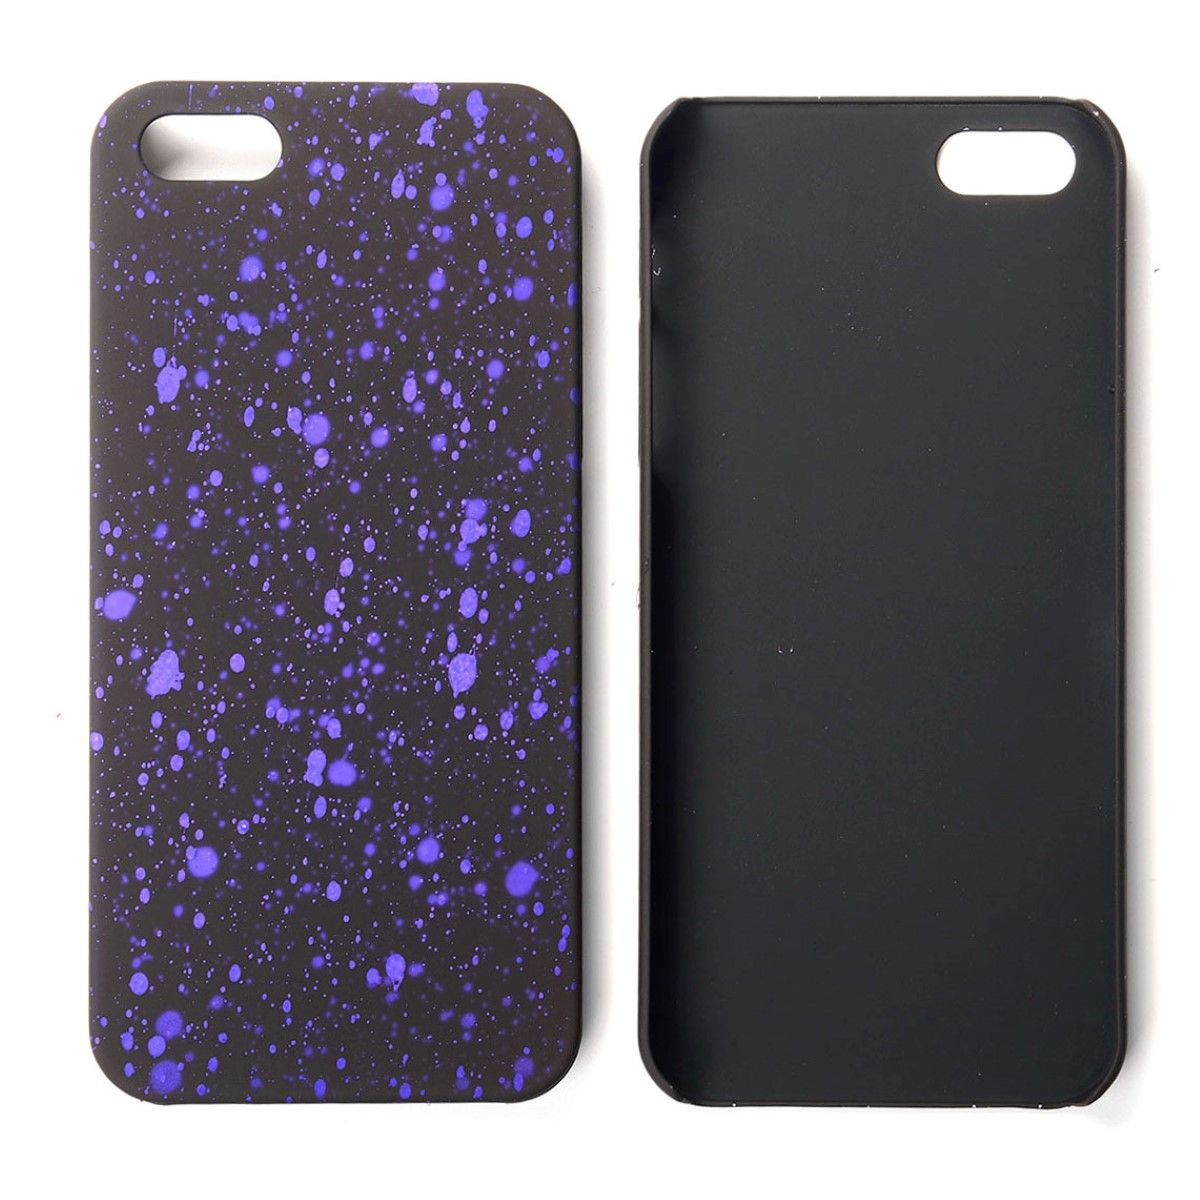 König Design mobile phone case protective case bumper shell for Apple iPhone 5 5s SE 3D stars purple